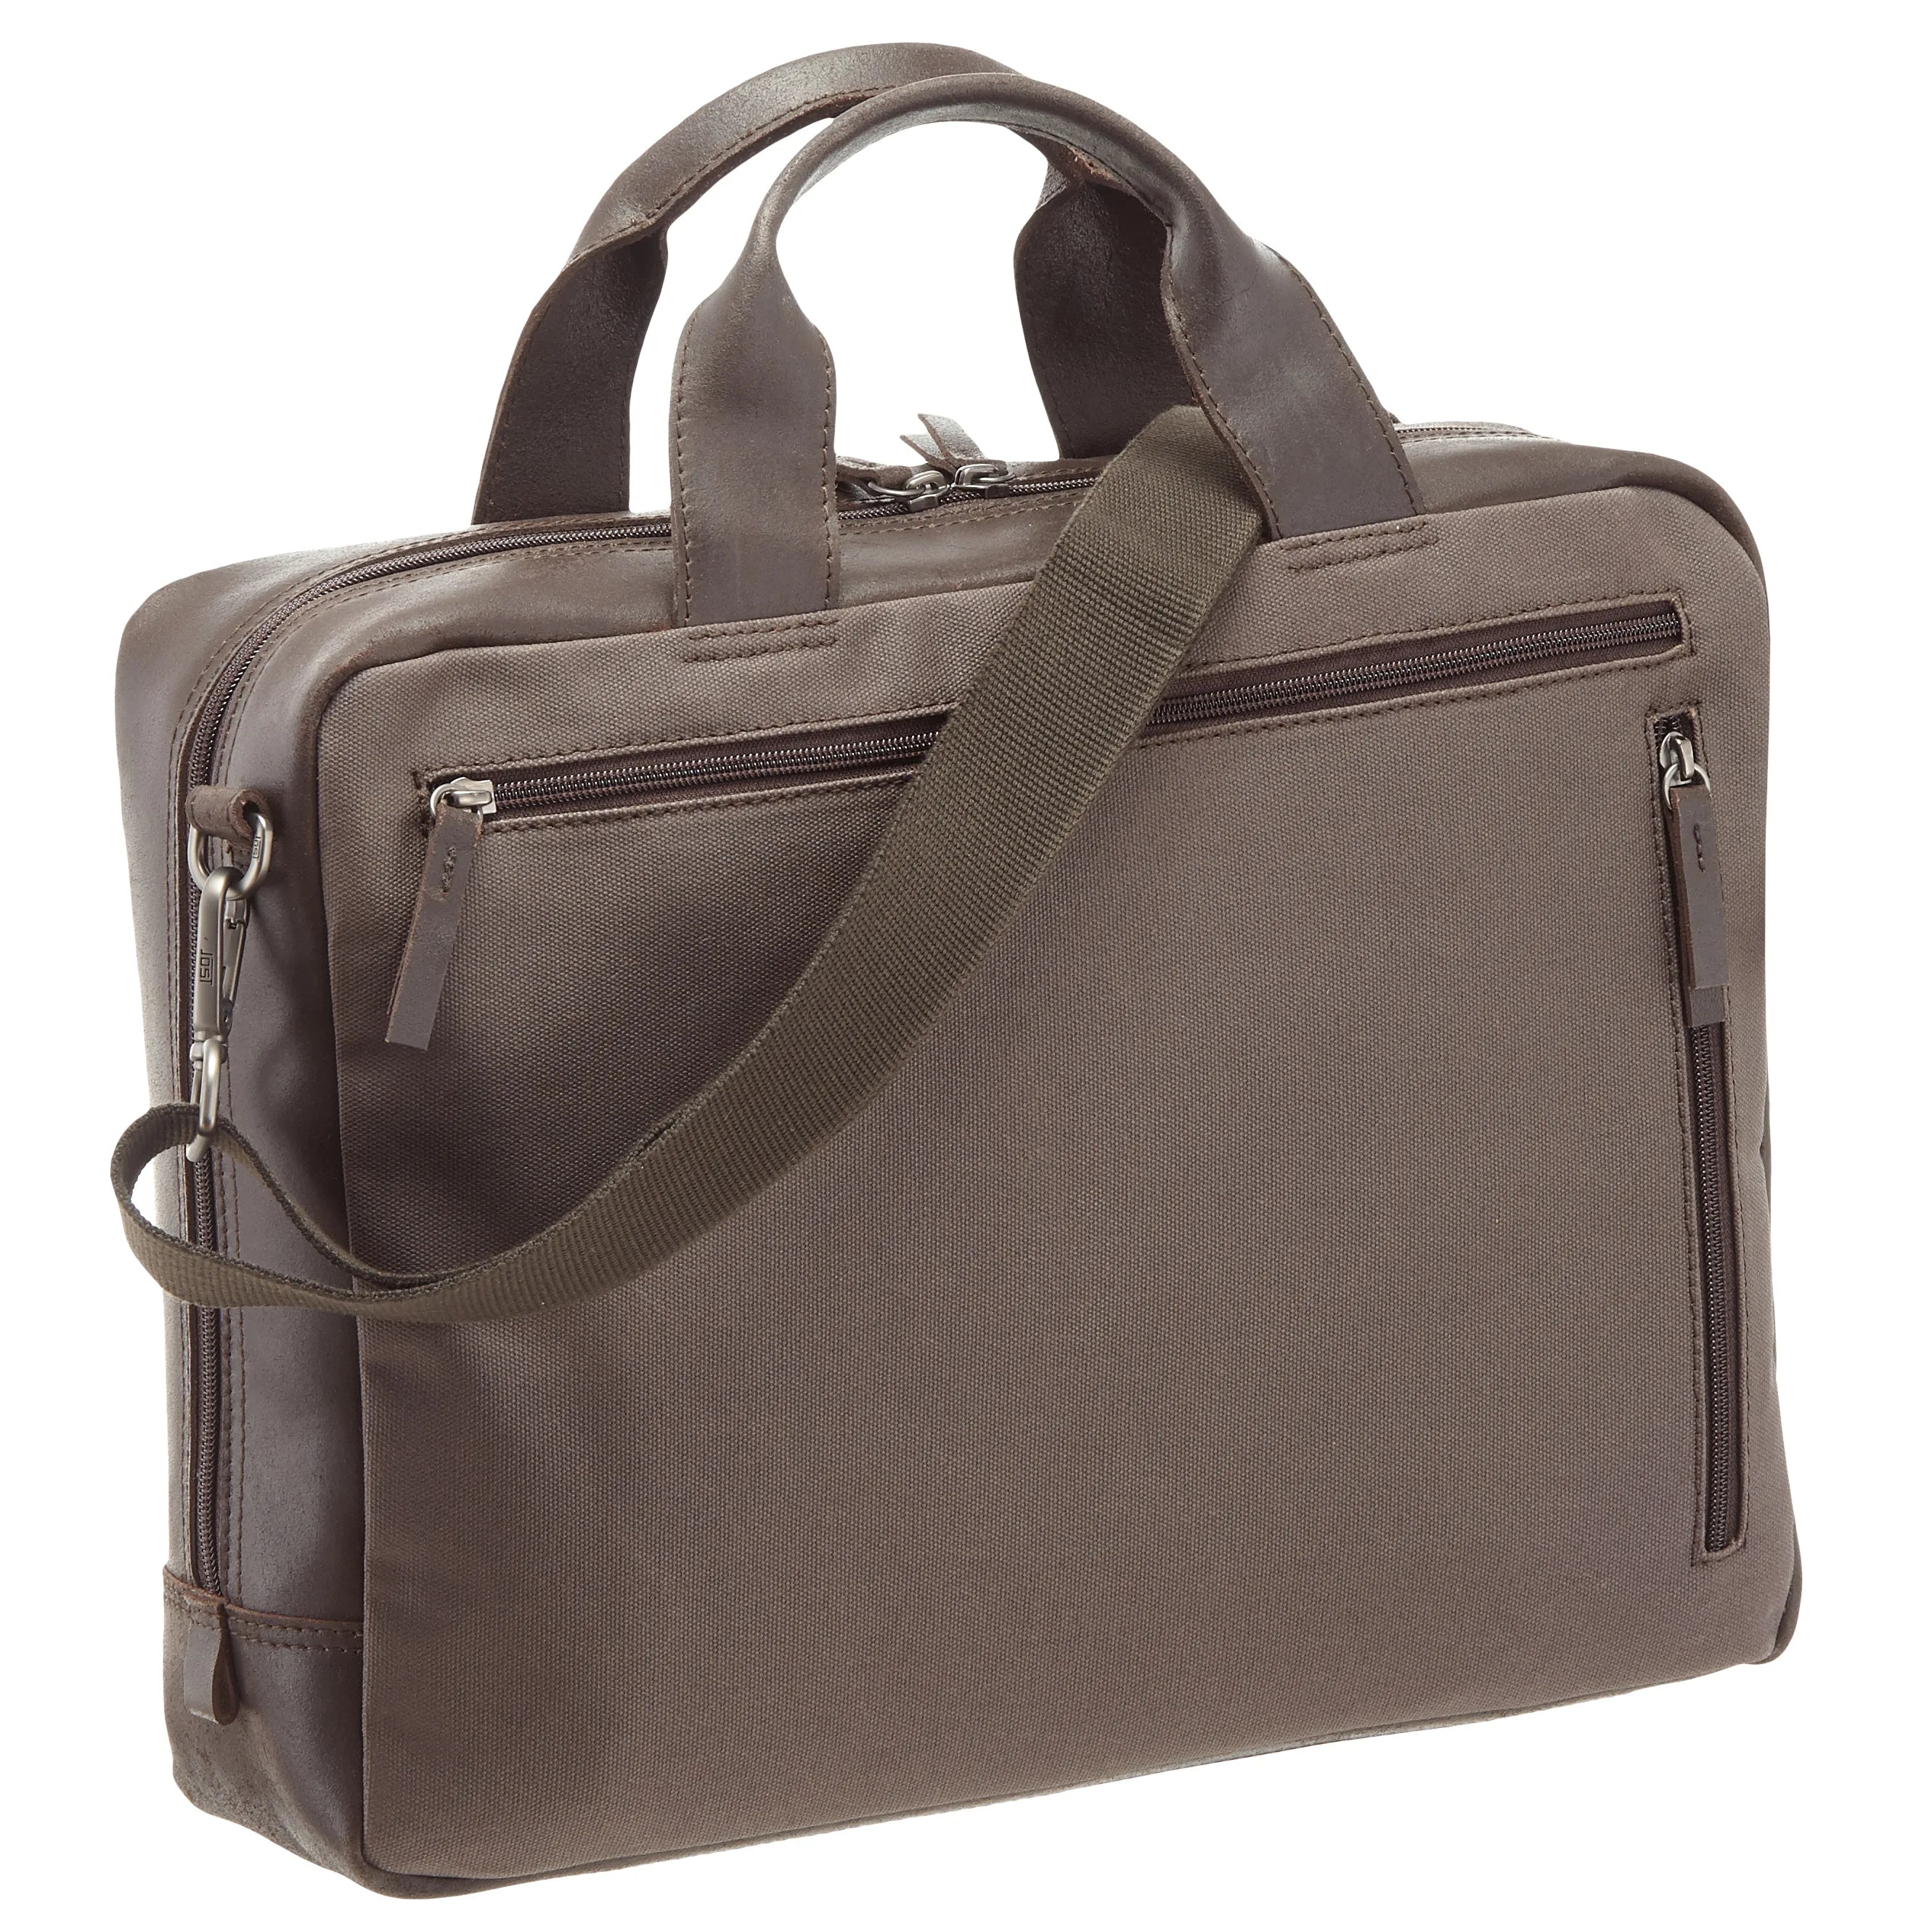 Jost Varberg business bag 36 cm - brown